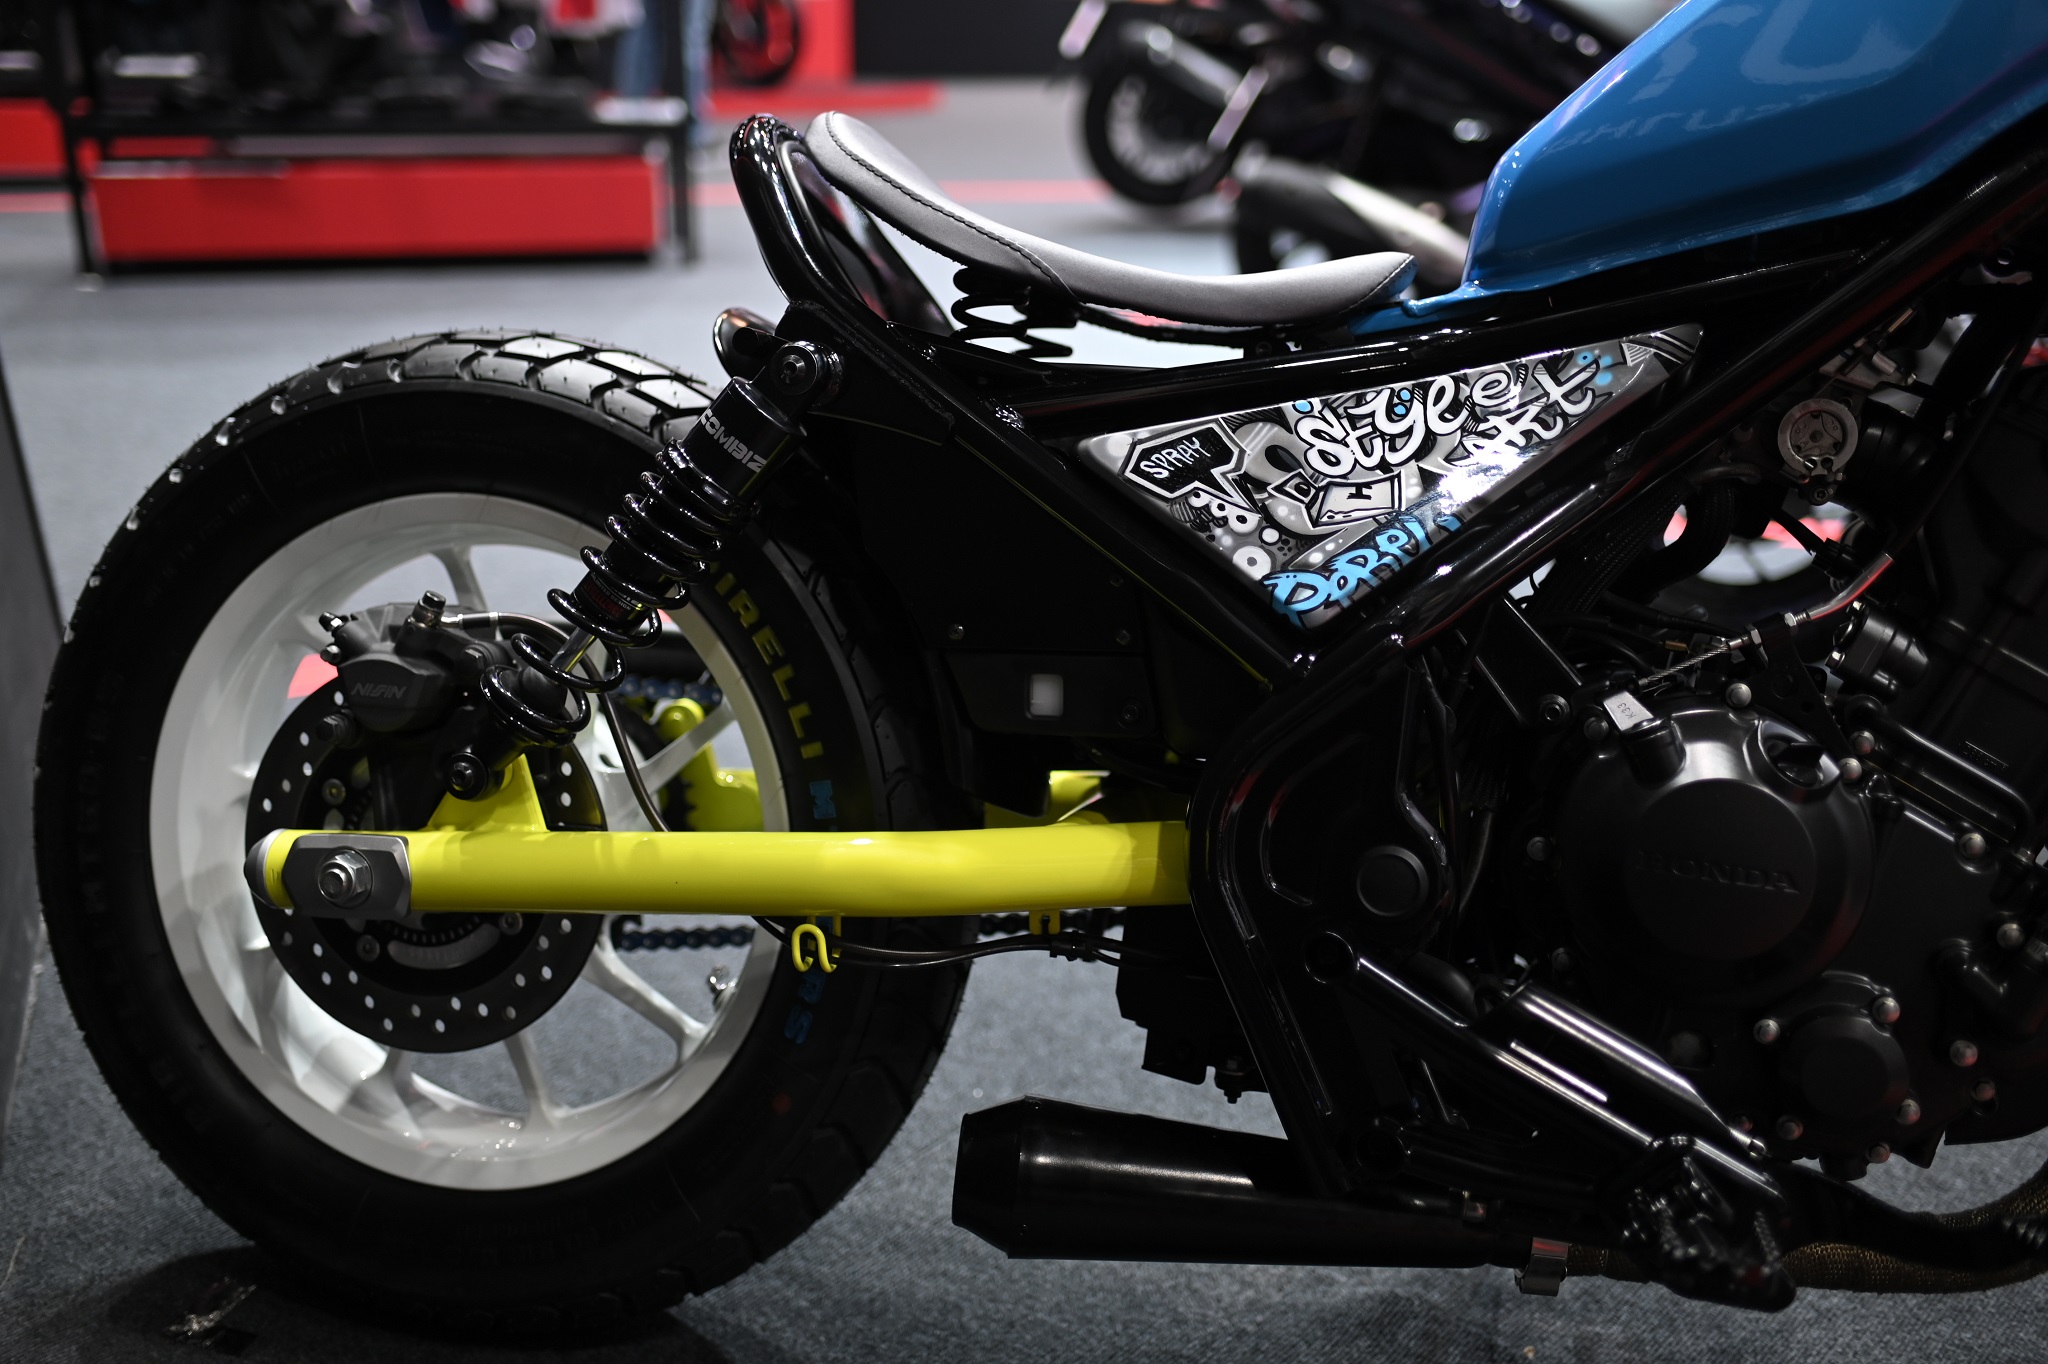 IAM_3705 ไบค์เกอร์รุ่นใหญ่ใจถึง พร้อมรับโปรเด็ดโซน Bigbike บูท Honda ในงาน Motor Show 2019 - IAM 3705